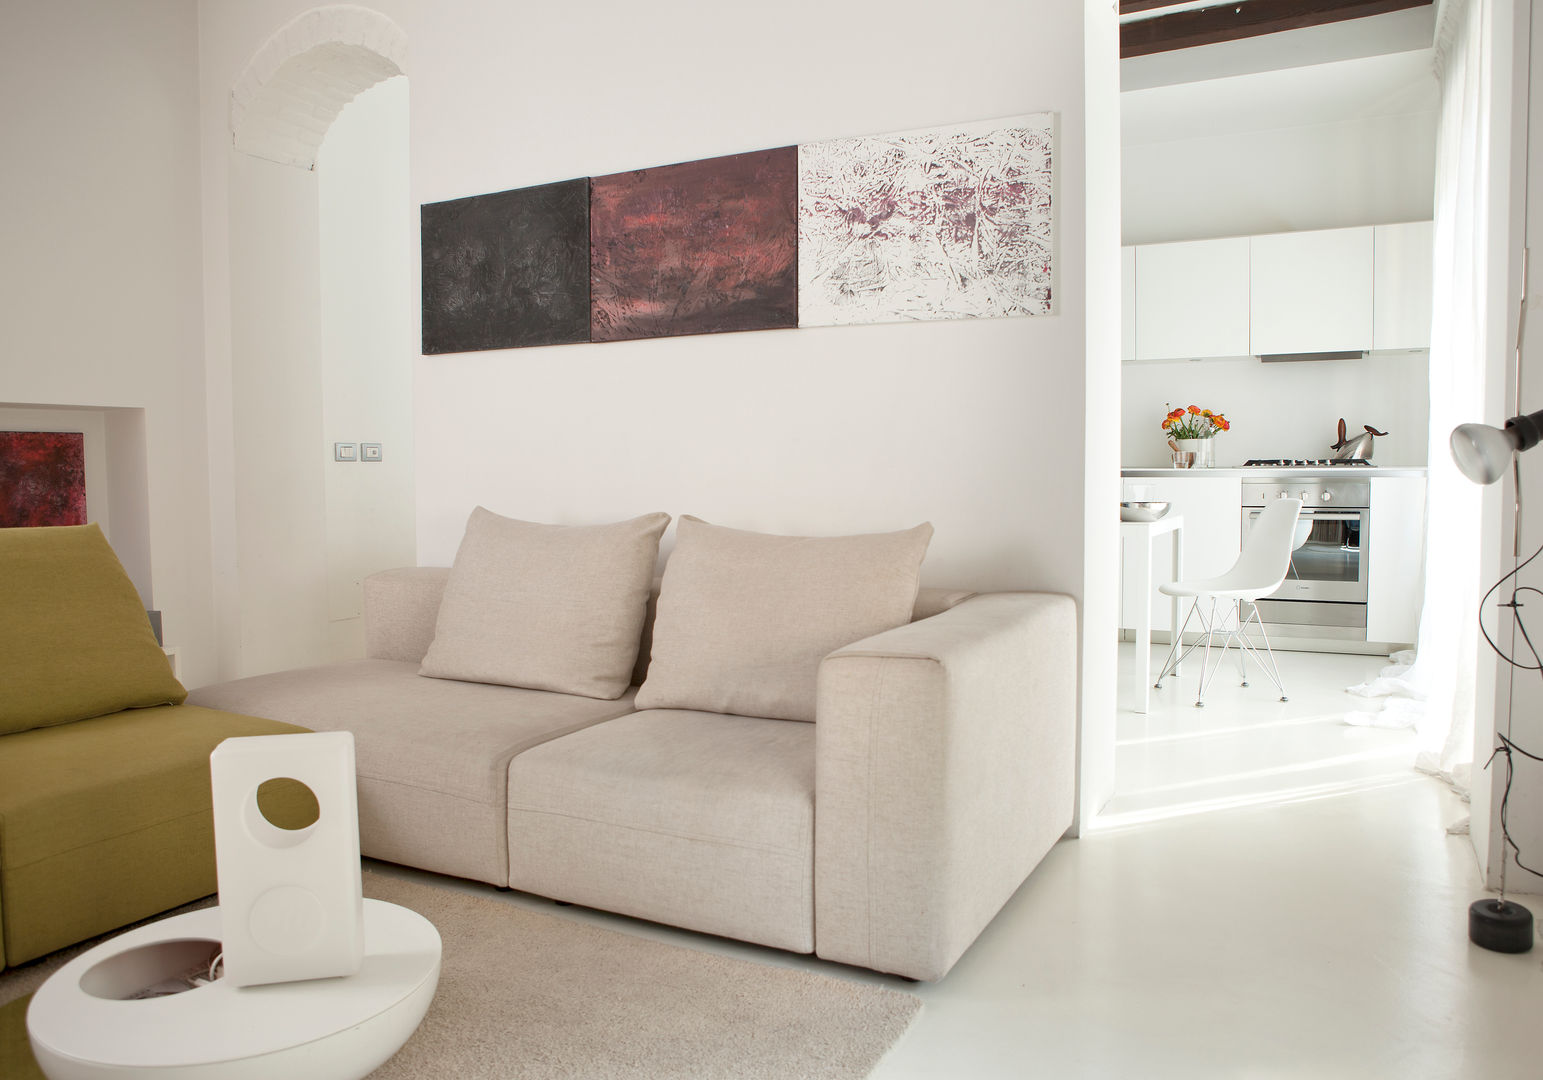 casa PT, davide petronici | architettura davide petronici | architettura Living room